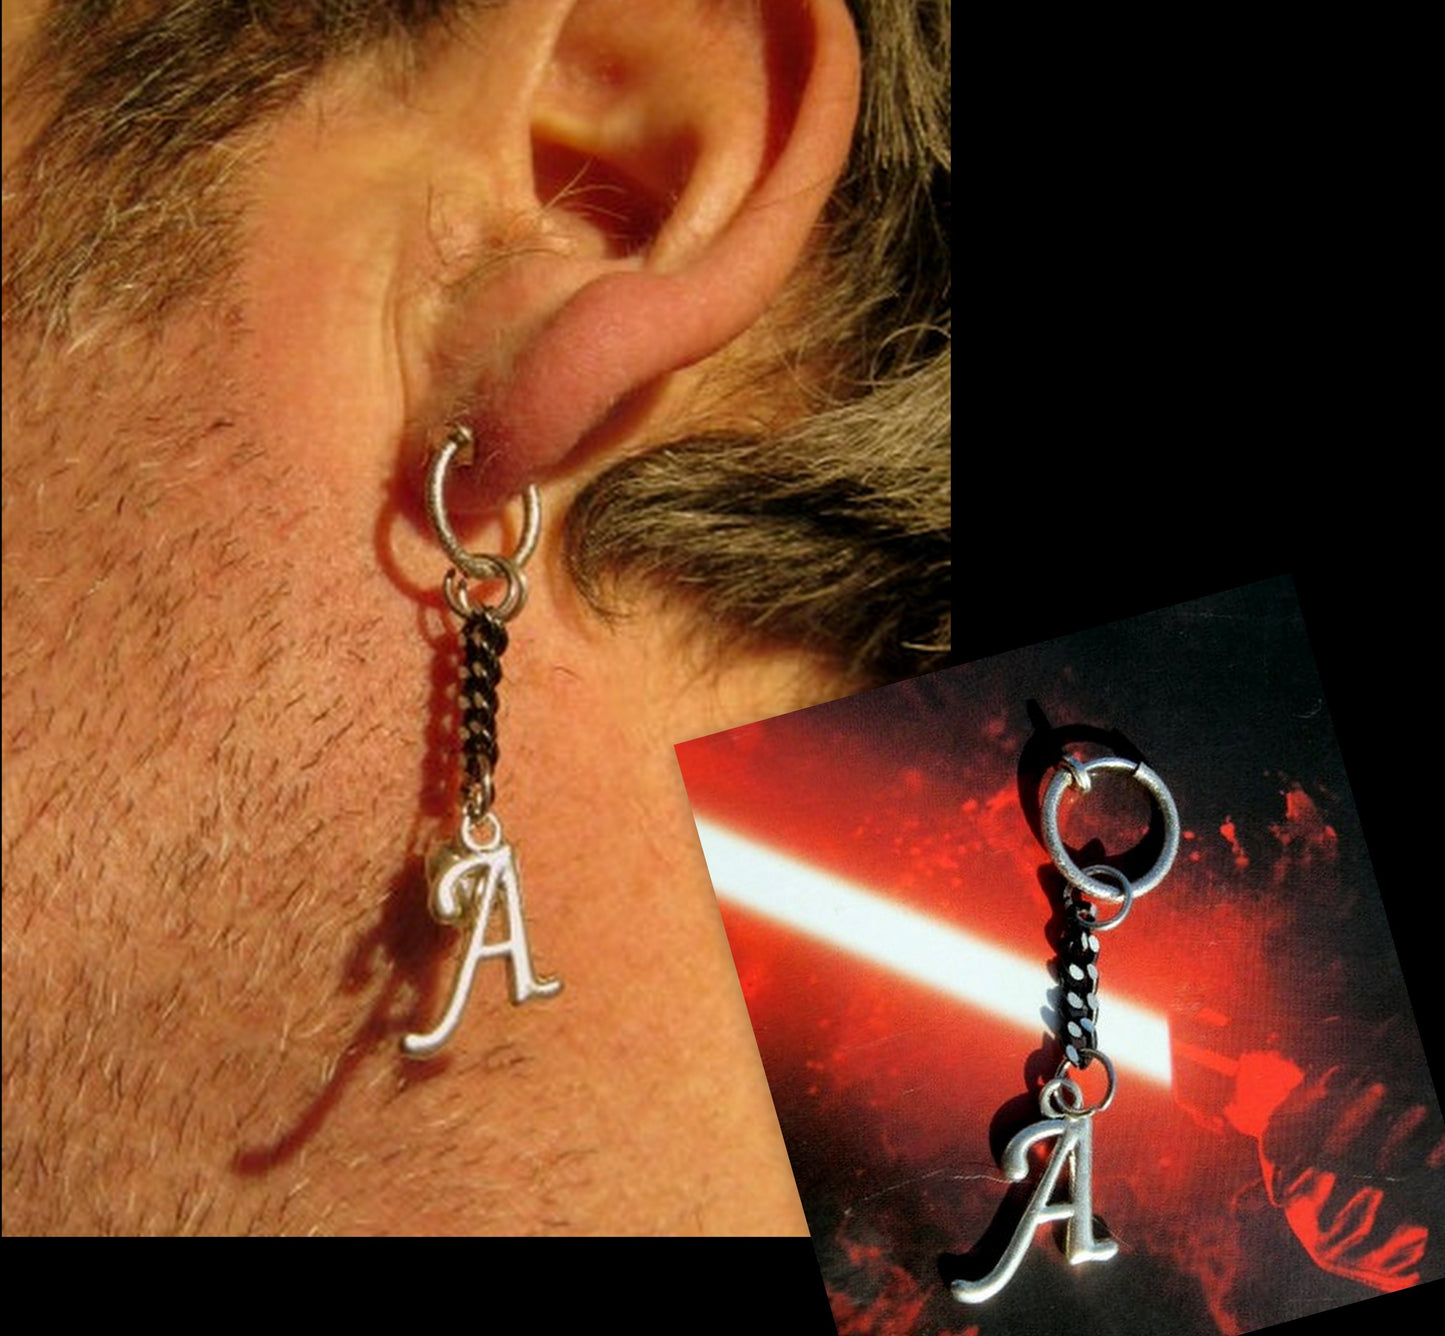 Men Earring silver Initial, black chain, stainless steel, Dangle Hoop/ clip on earring, Handmade earring women men gift